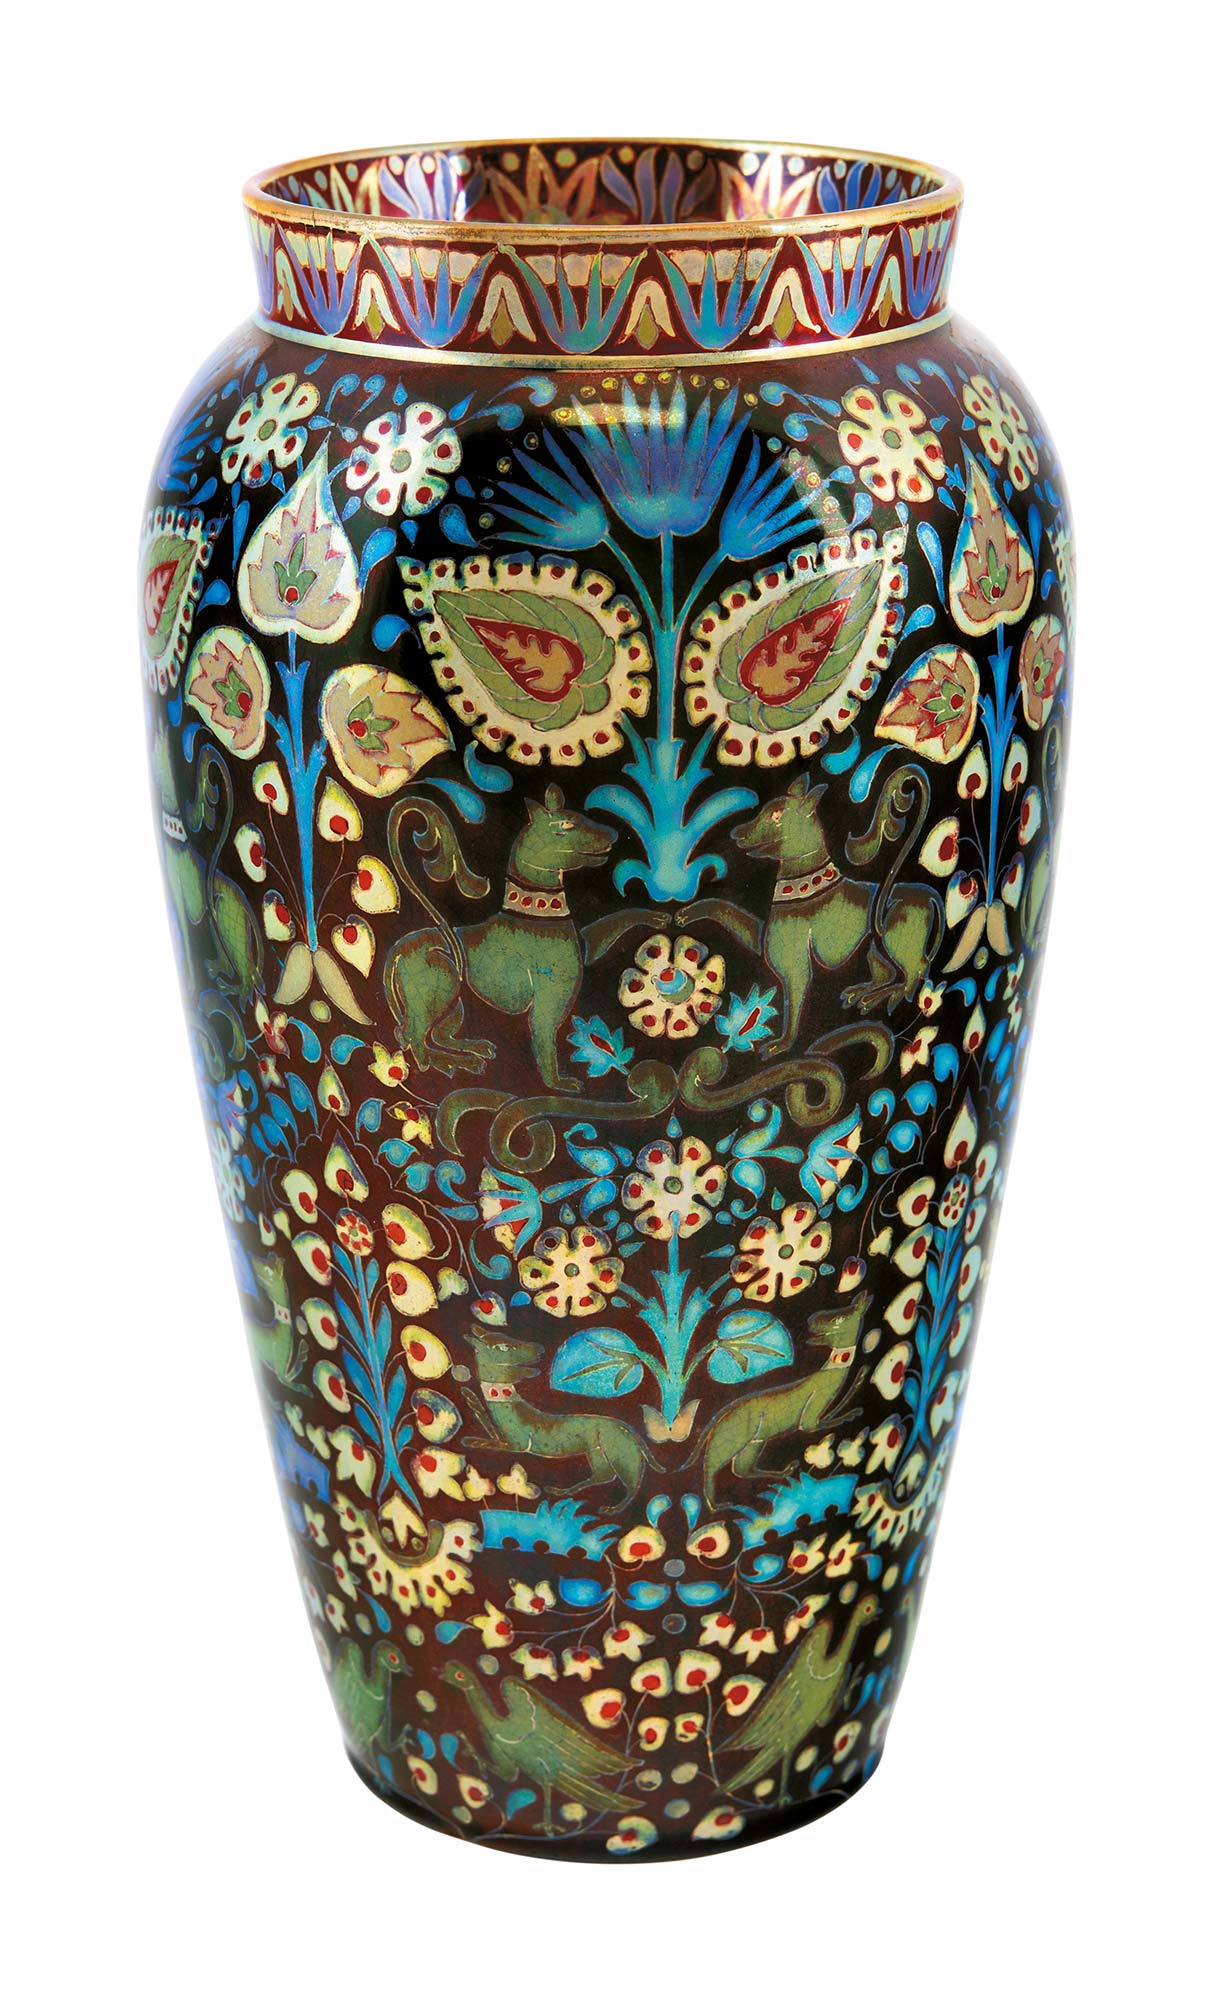 Zsolnay Vase with Millennium Ornaments, Zsolnay, around 1898